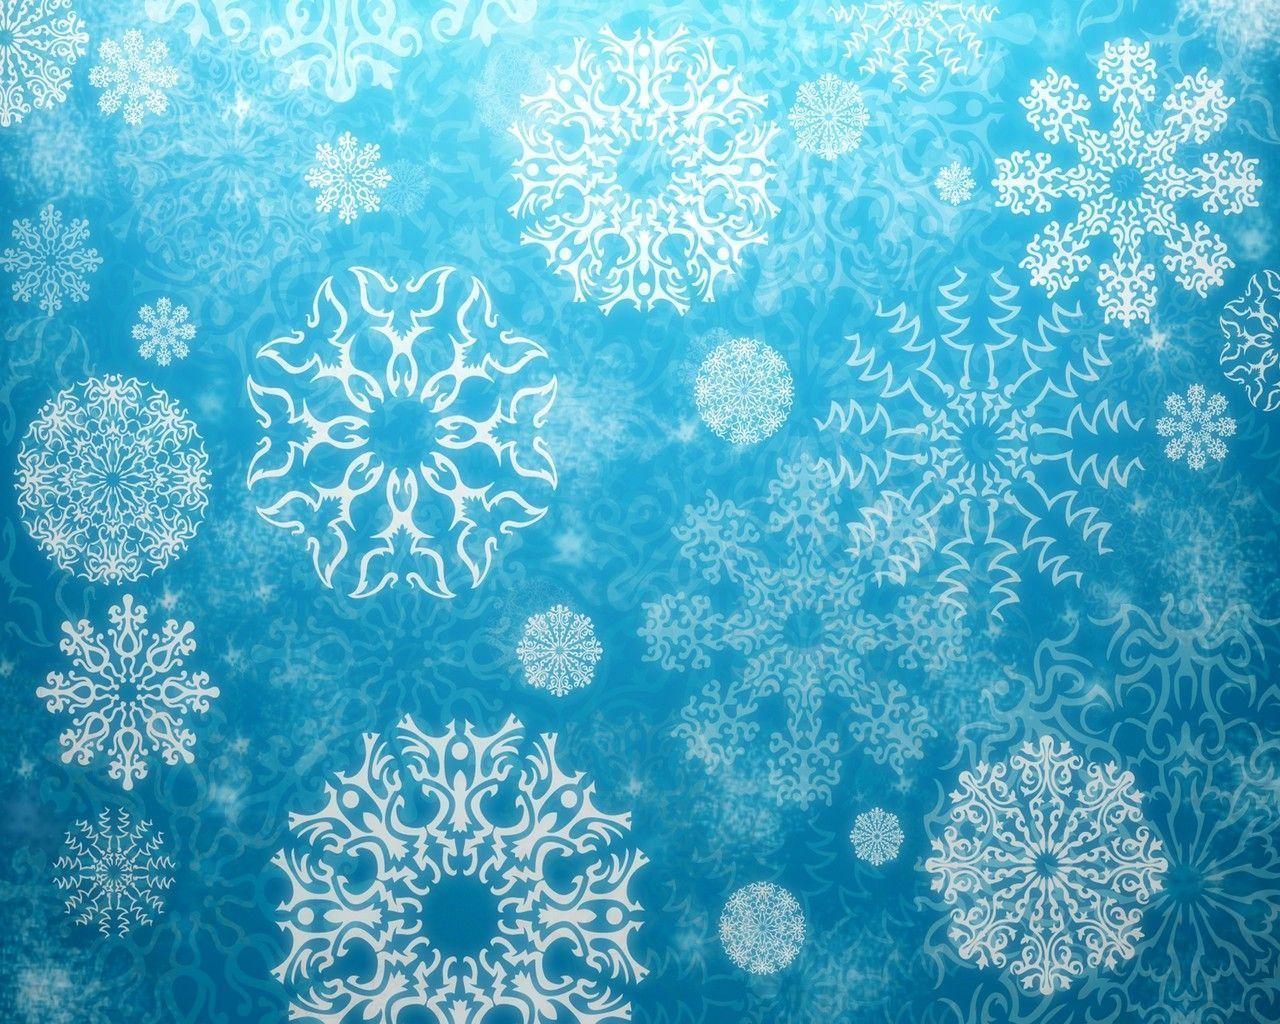 Snowflake Wallpaper: Free Desktop Wallpaper Snowflakes. .Ssofc